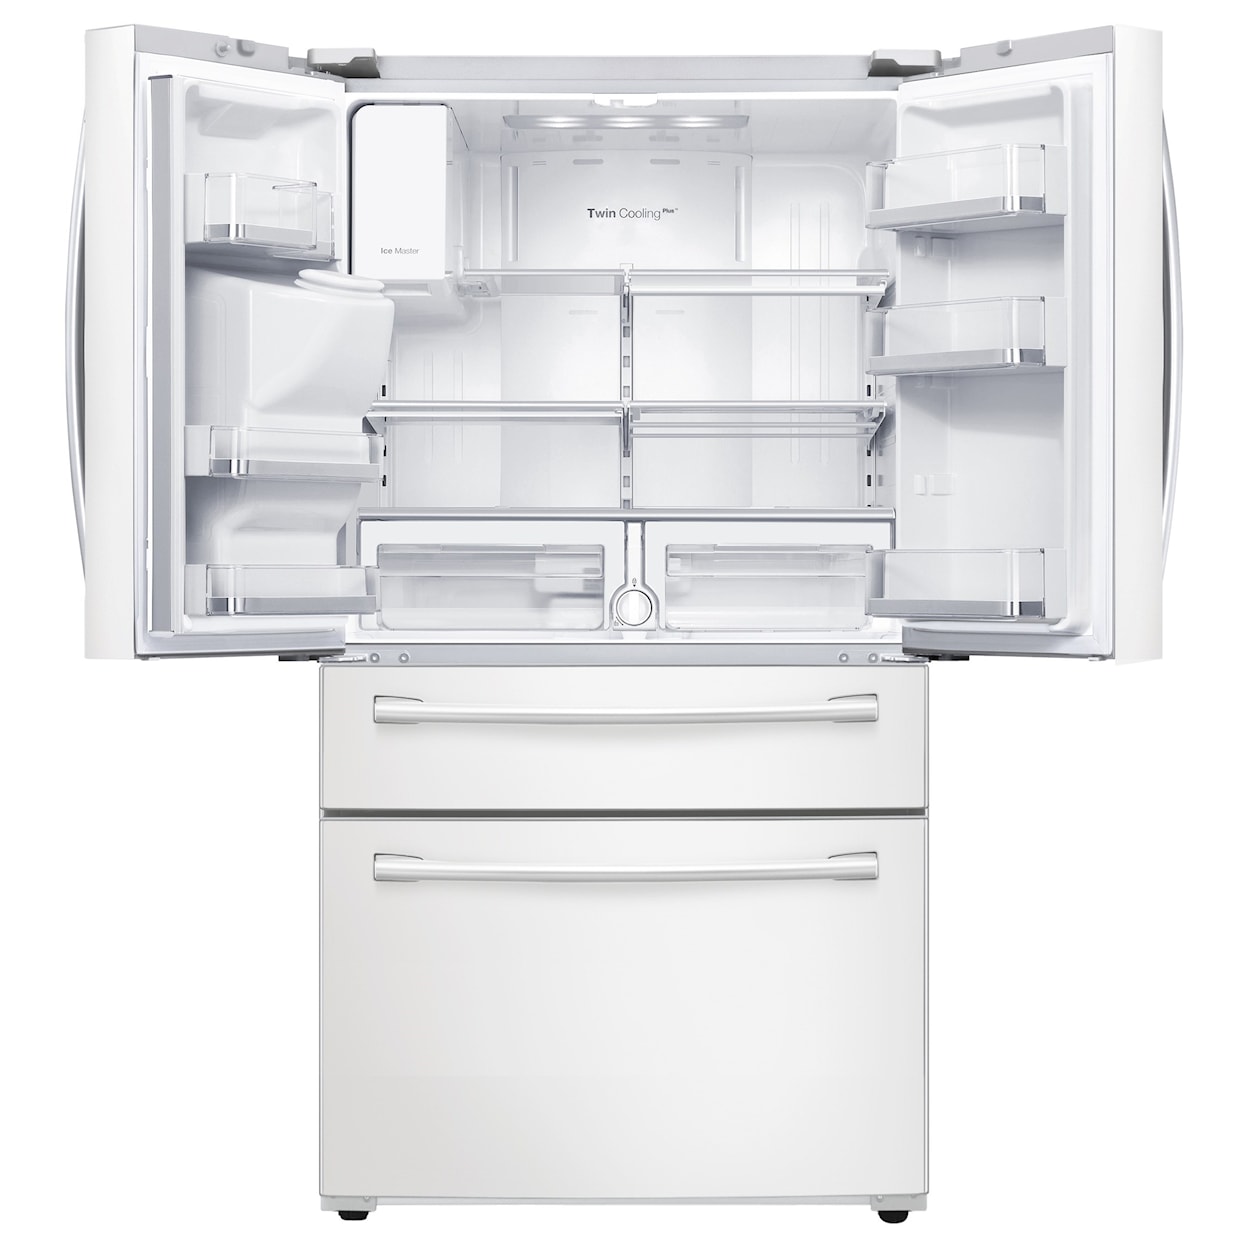 Samsung Appliances French Door Refrigerators 36" 28 cu. ft. French Door Refrigerator